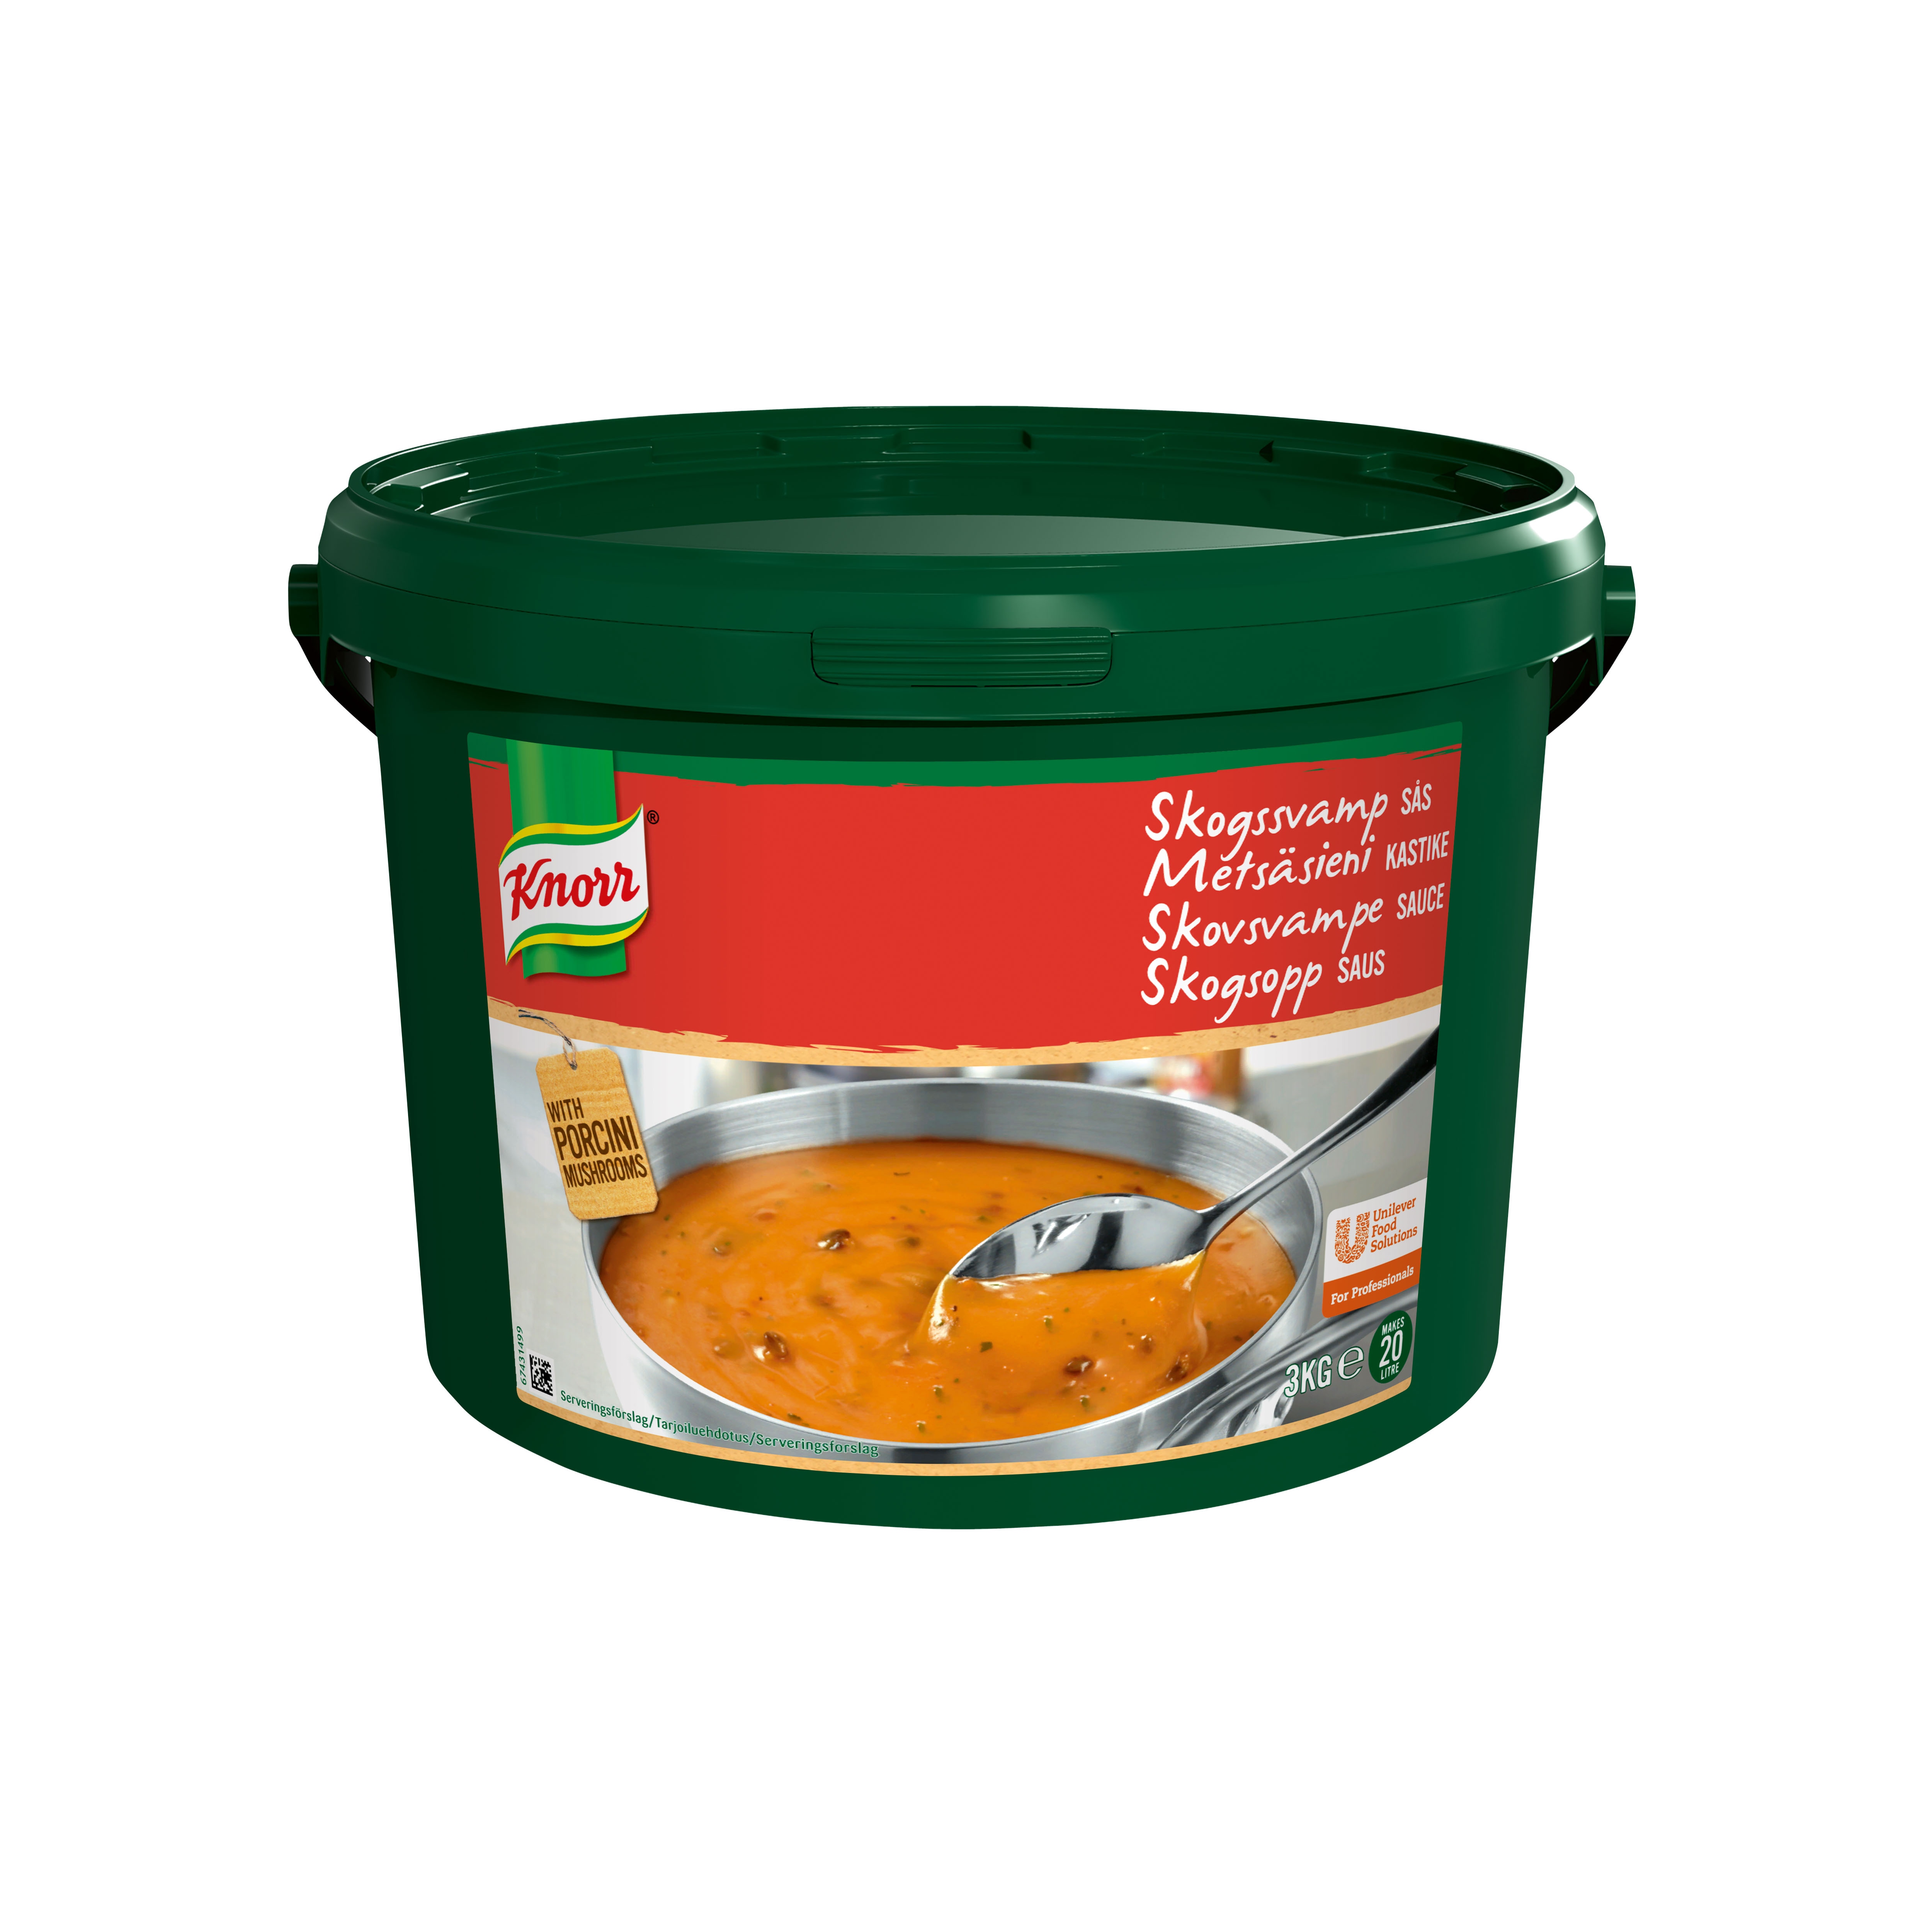 Knorr Metsäsienikastike 3 kg / 20 L - 